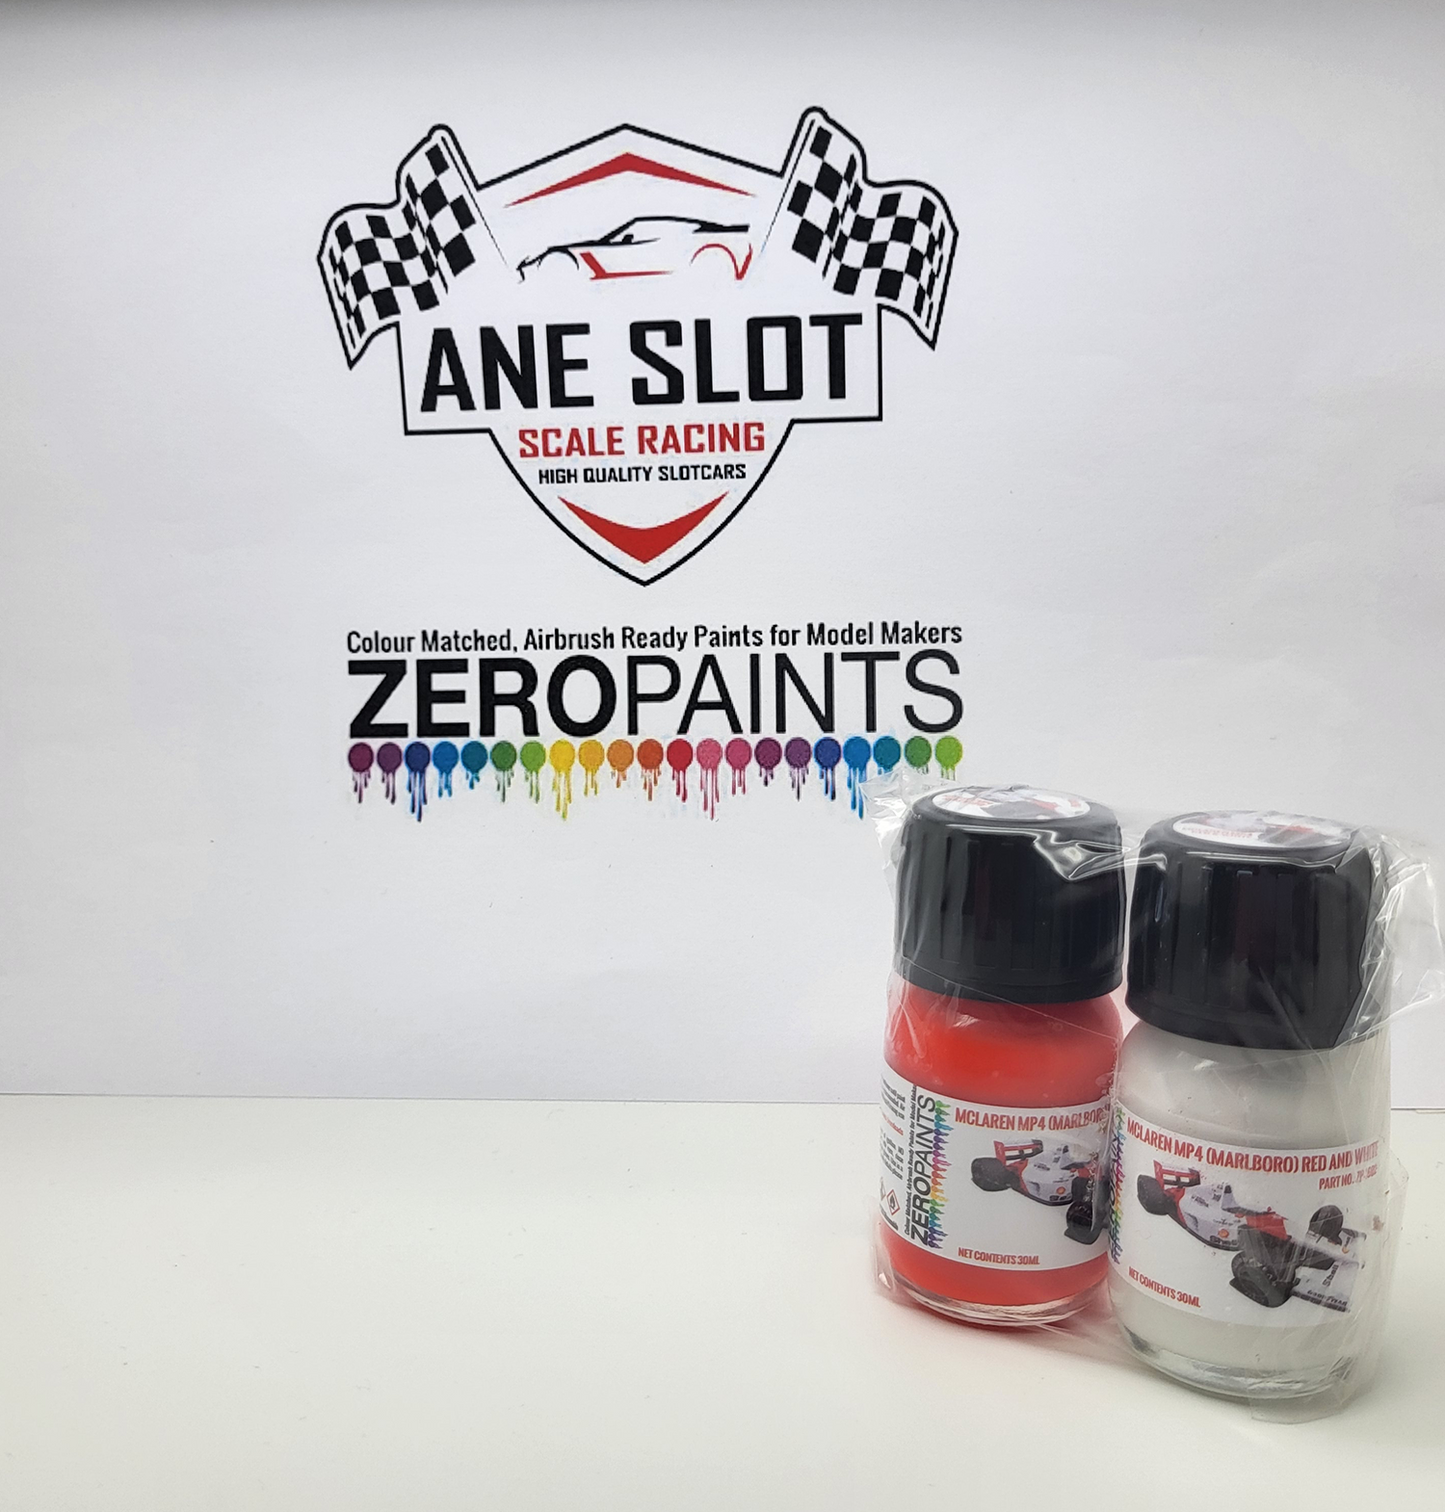 Zeropaints ZP-1602 - " McLaren Mp4 (Marlboro) Red and White